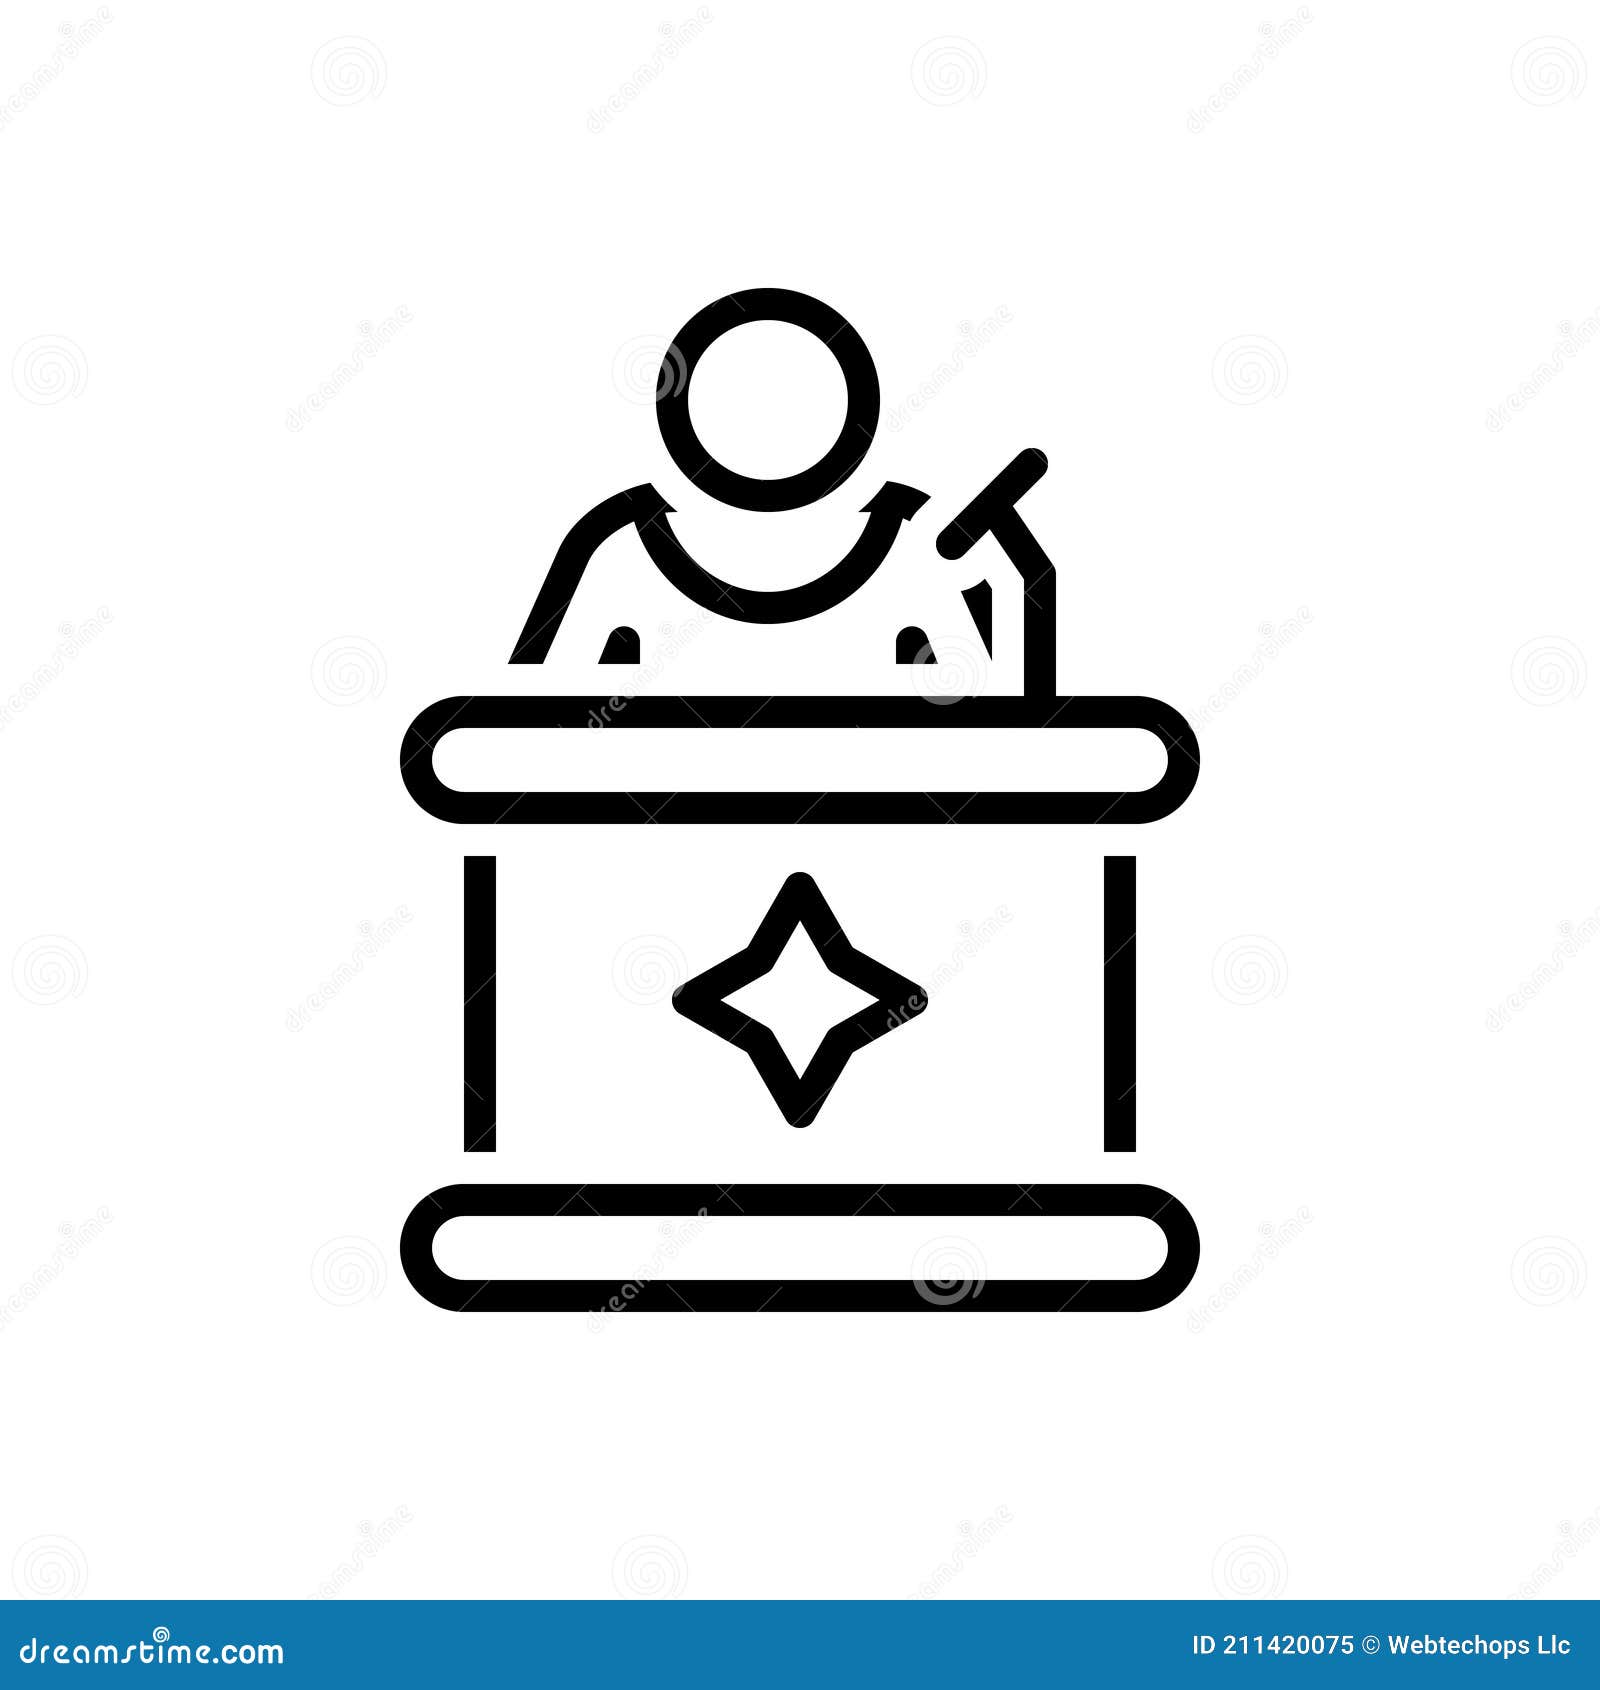 black line icon for spokesman, lecturer and speaker